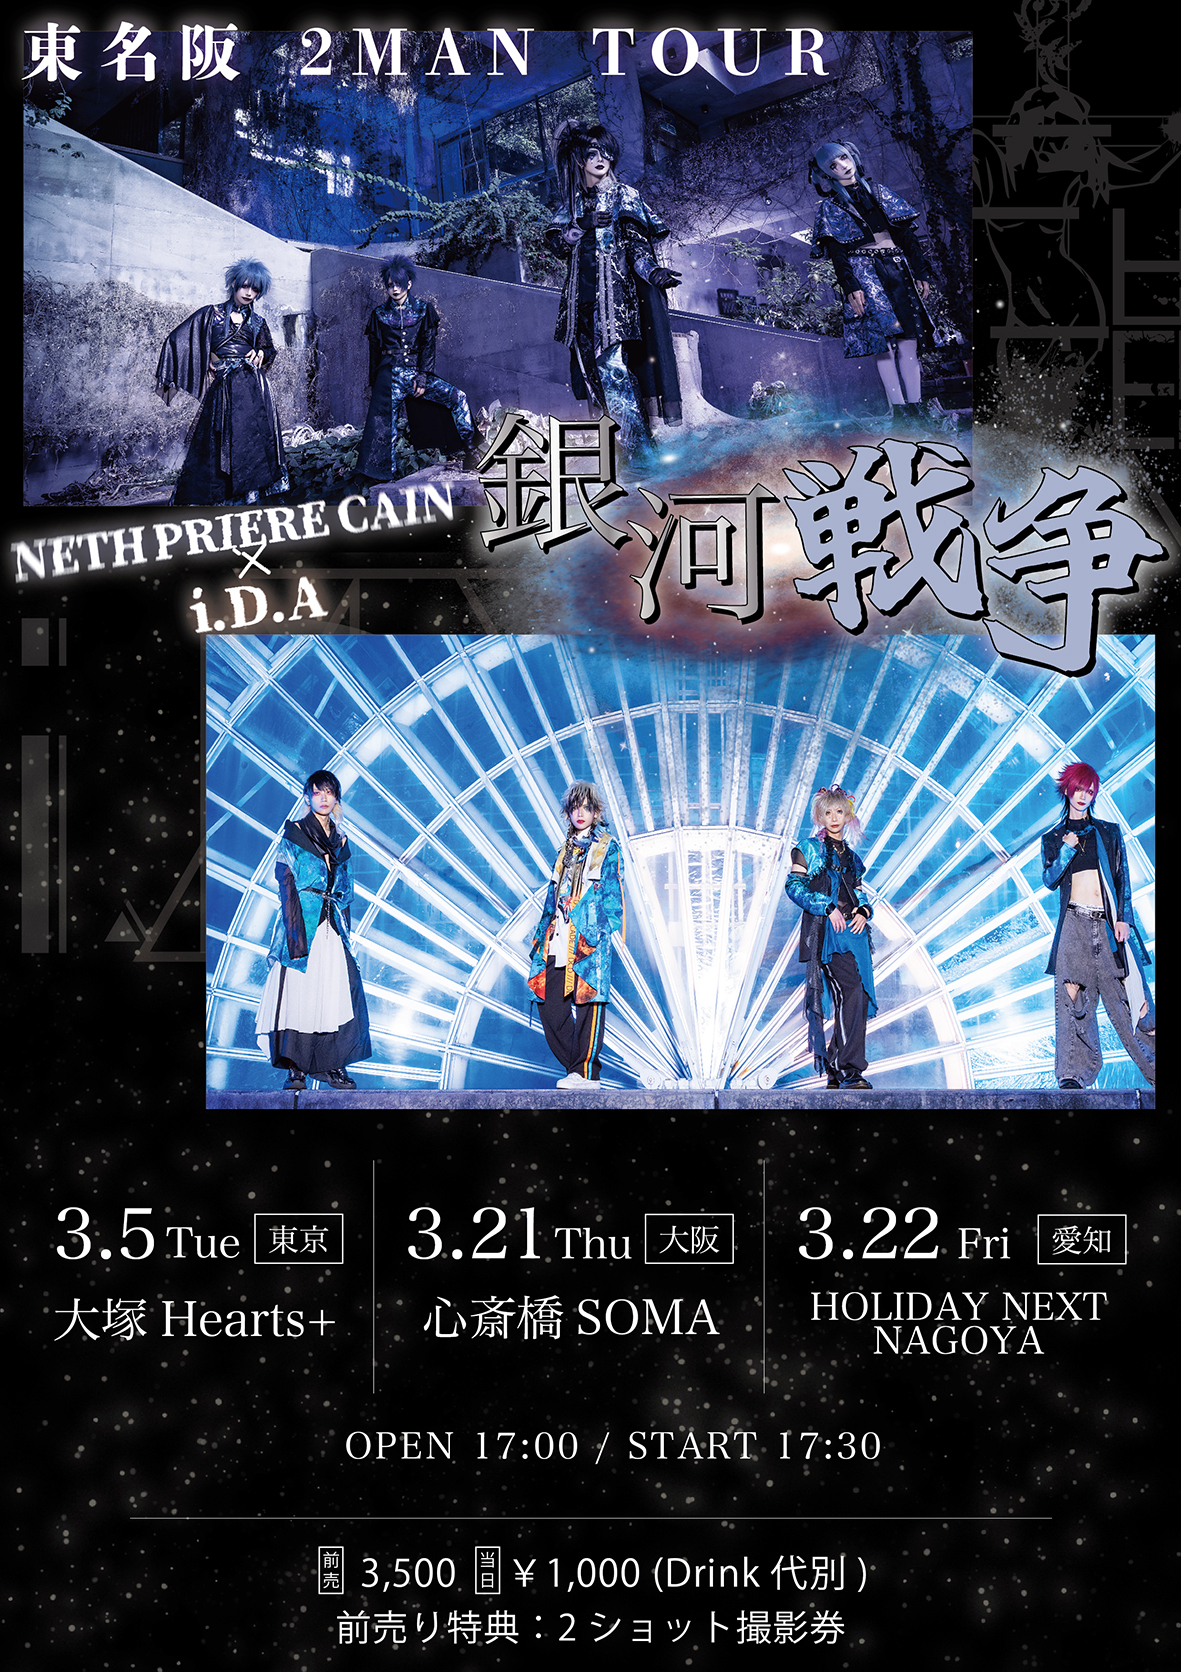 NETH PRIERE CAIN × i.D.A 東名阪2MAN TOUR「銀河戦争-NAGOYA-」